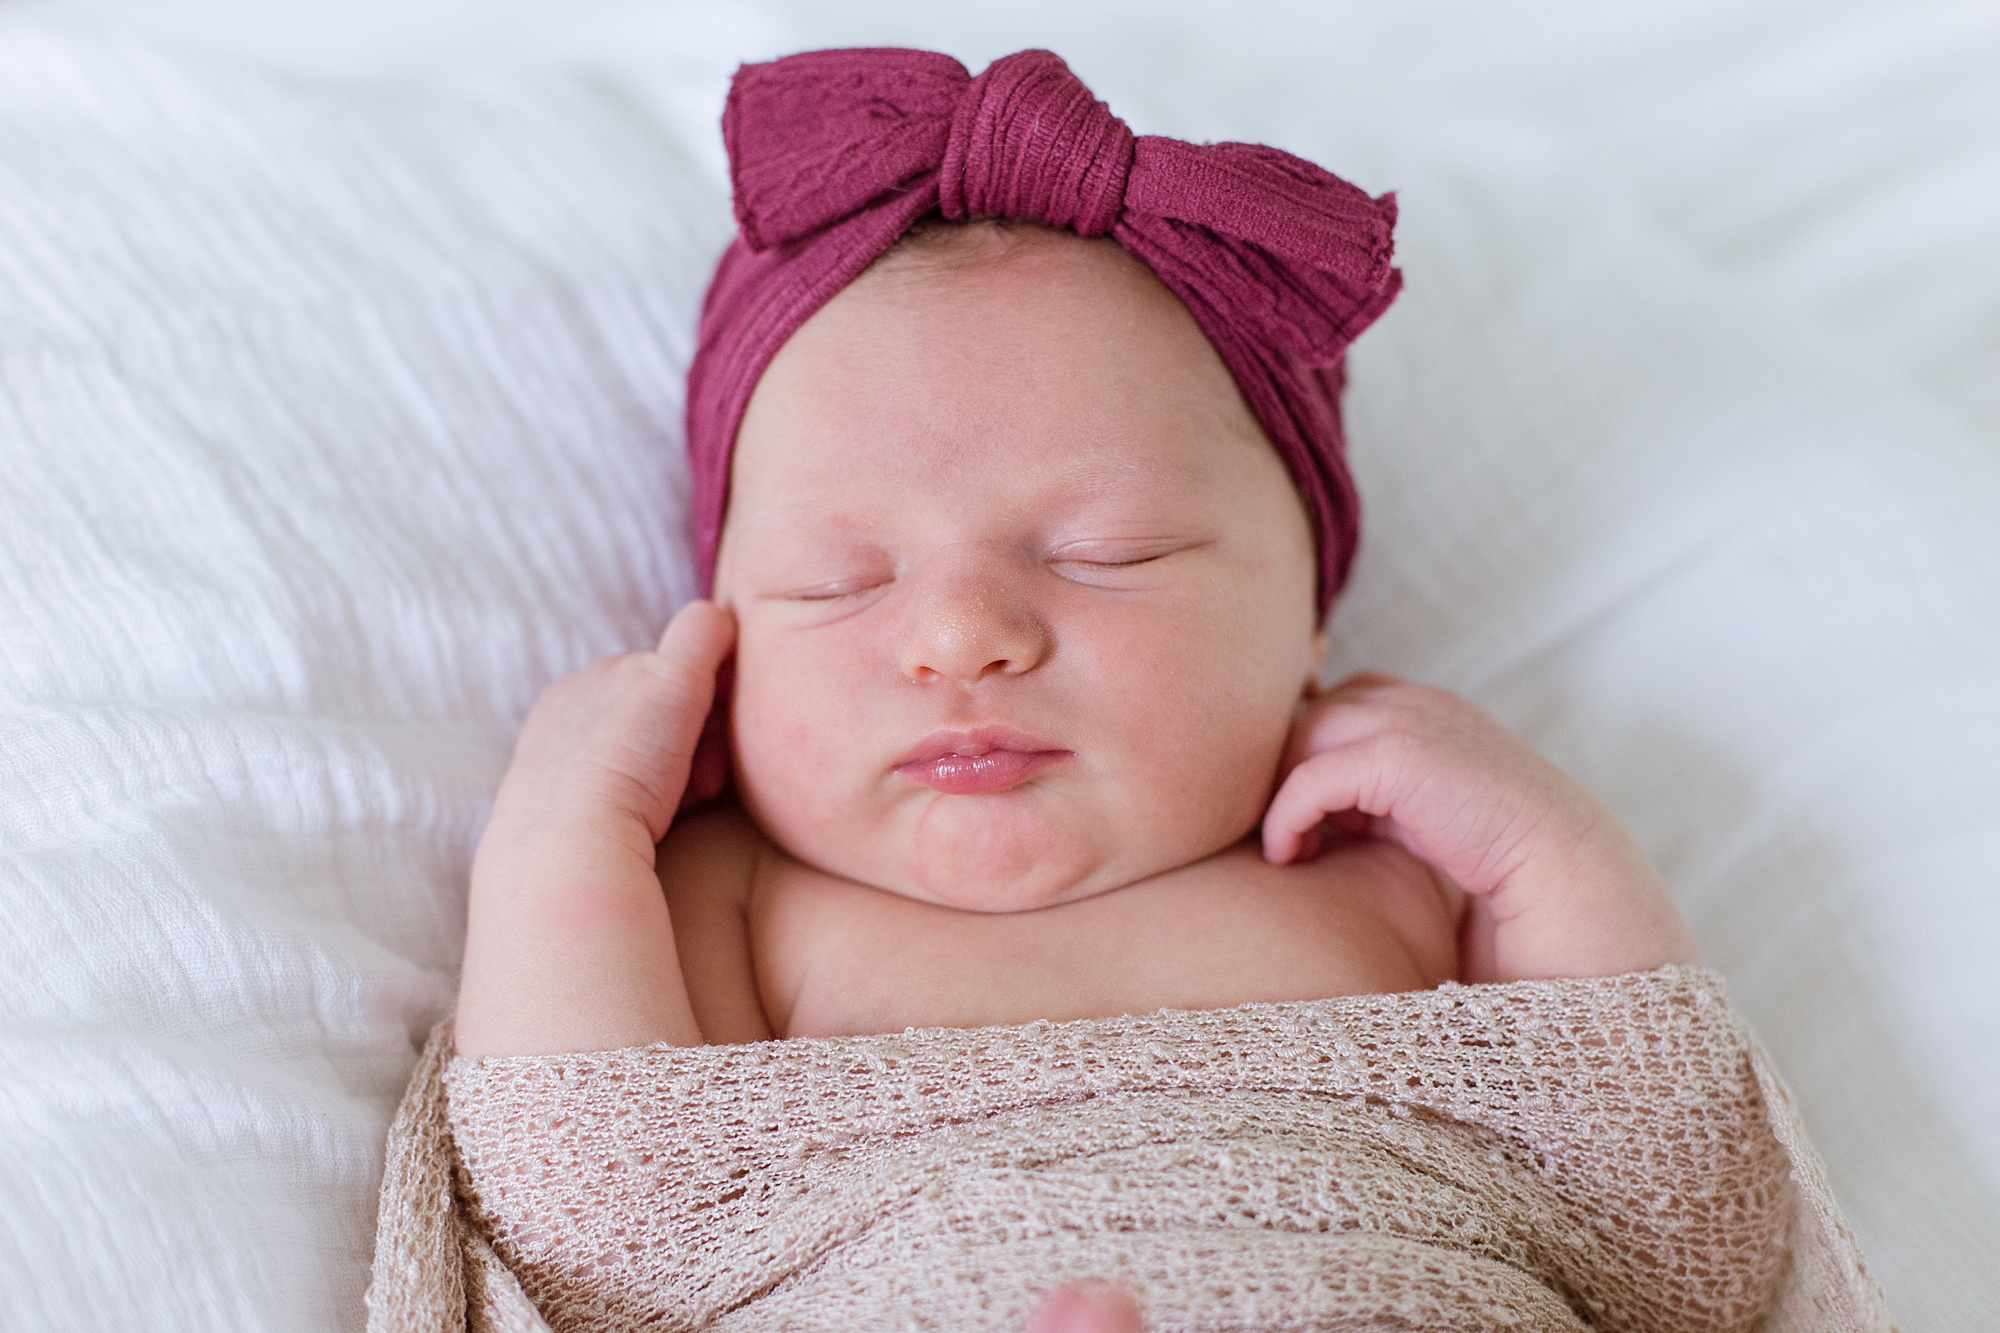 baby sleeps in red headband during newborn photos 